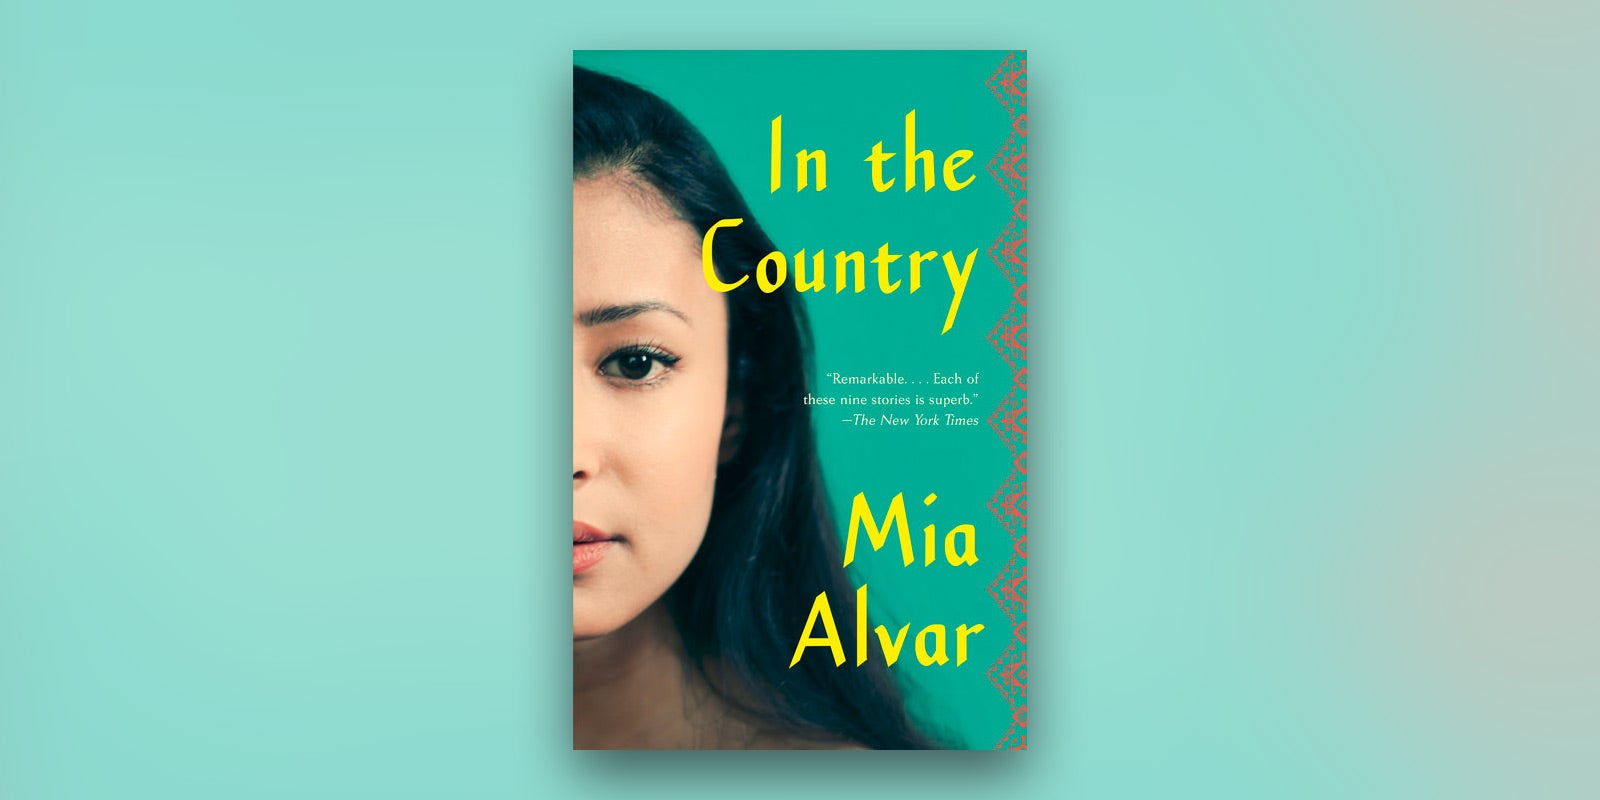 Mia Alvar Wins 2016 PEN/Robert W. Bingham Prize for Debut Fiction